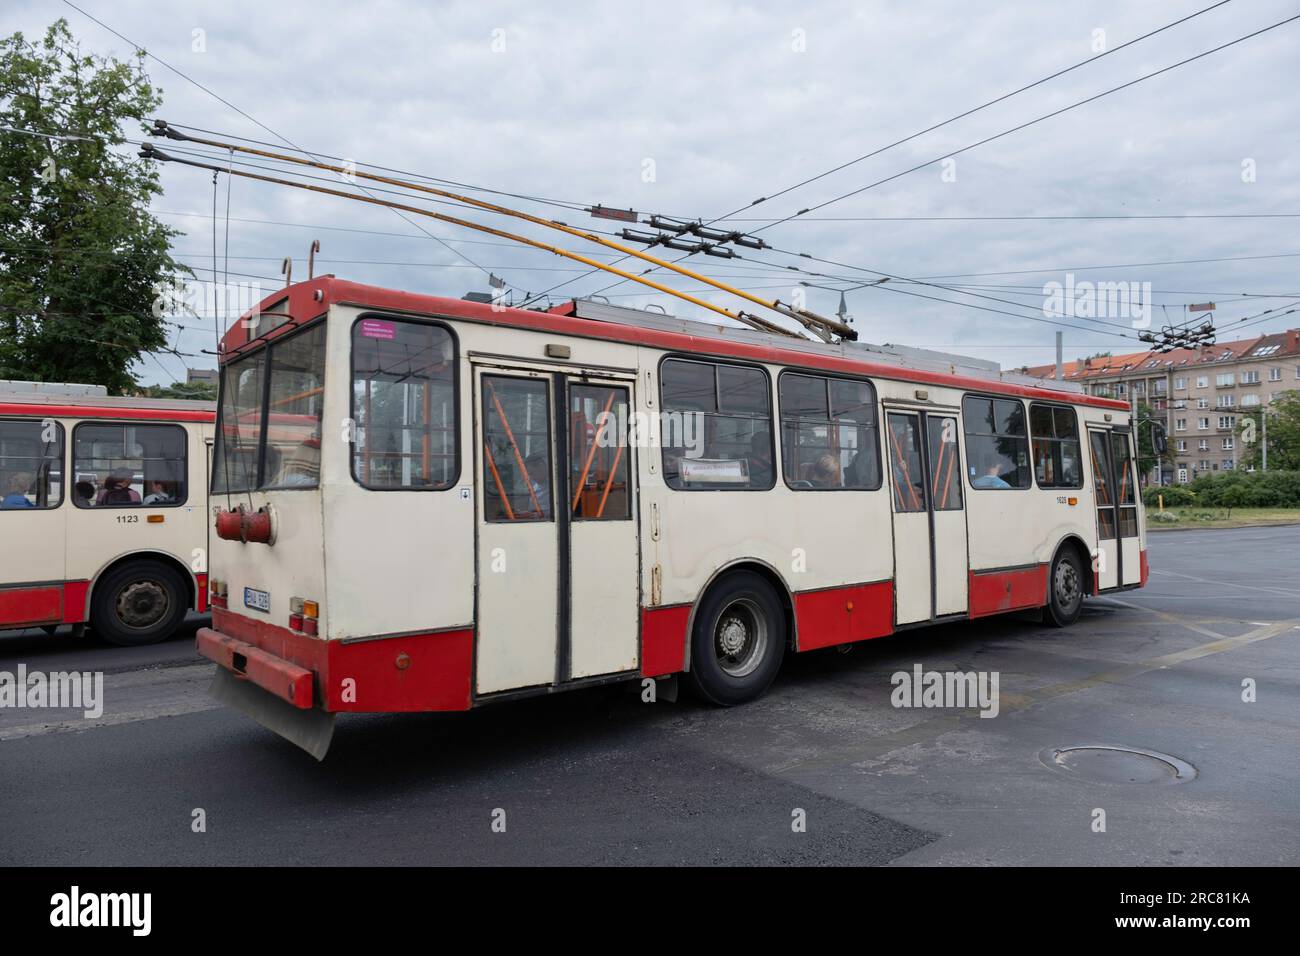 Old Skoda Trolley Buses in a street in Vilnius, Lithuania. Public Transport VVT (Vilniaus viešasis transportas) Stock Photo